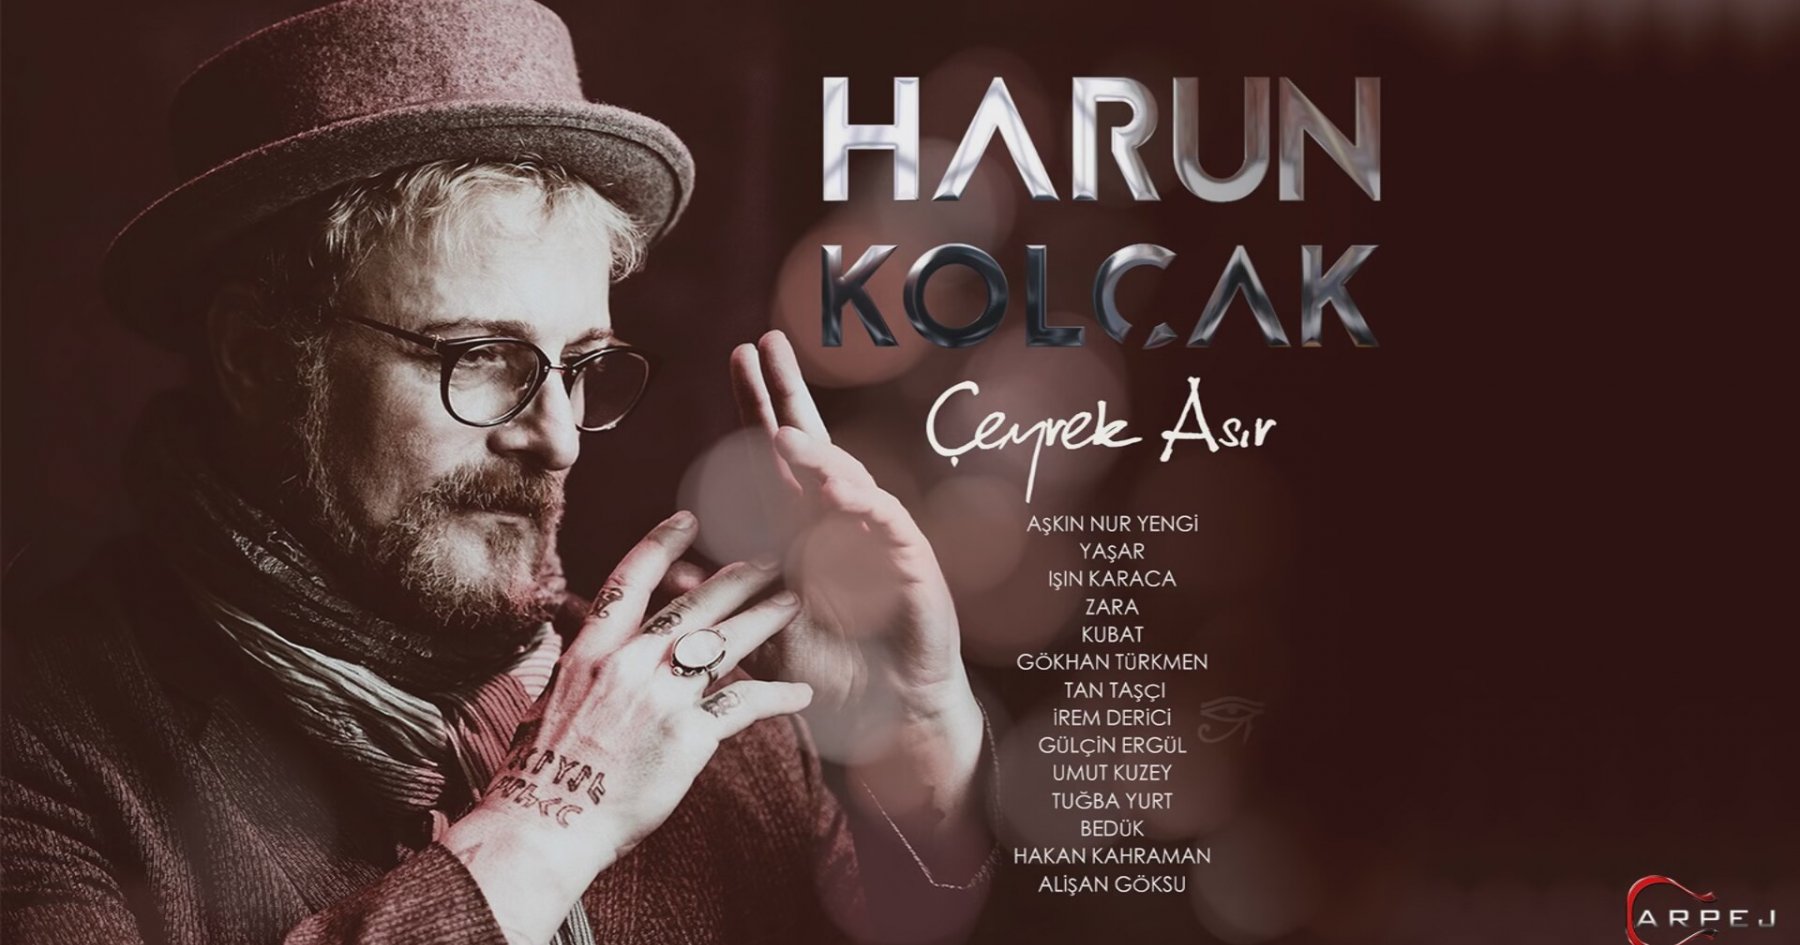 Harun Kolçak Deli Et Beni (feat. Tuğba Yurt)